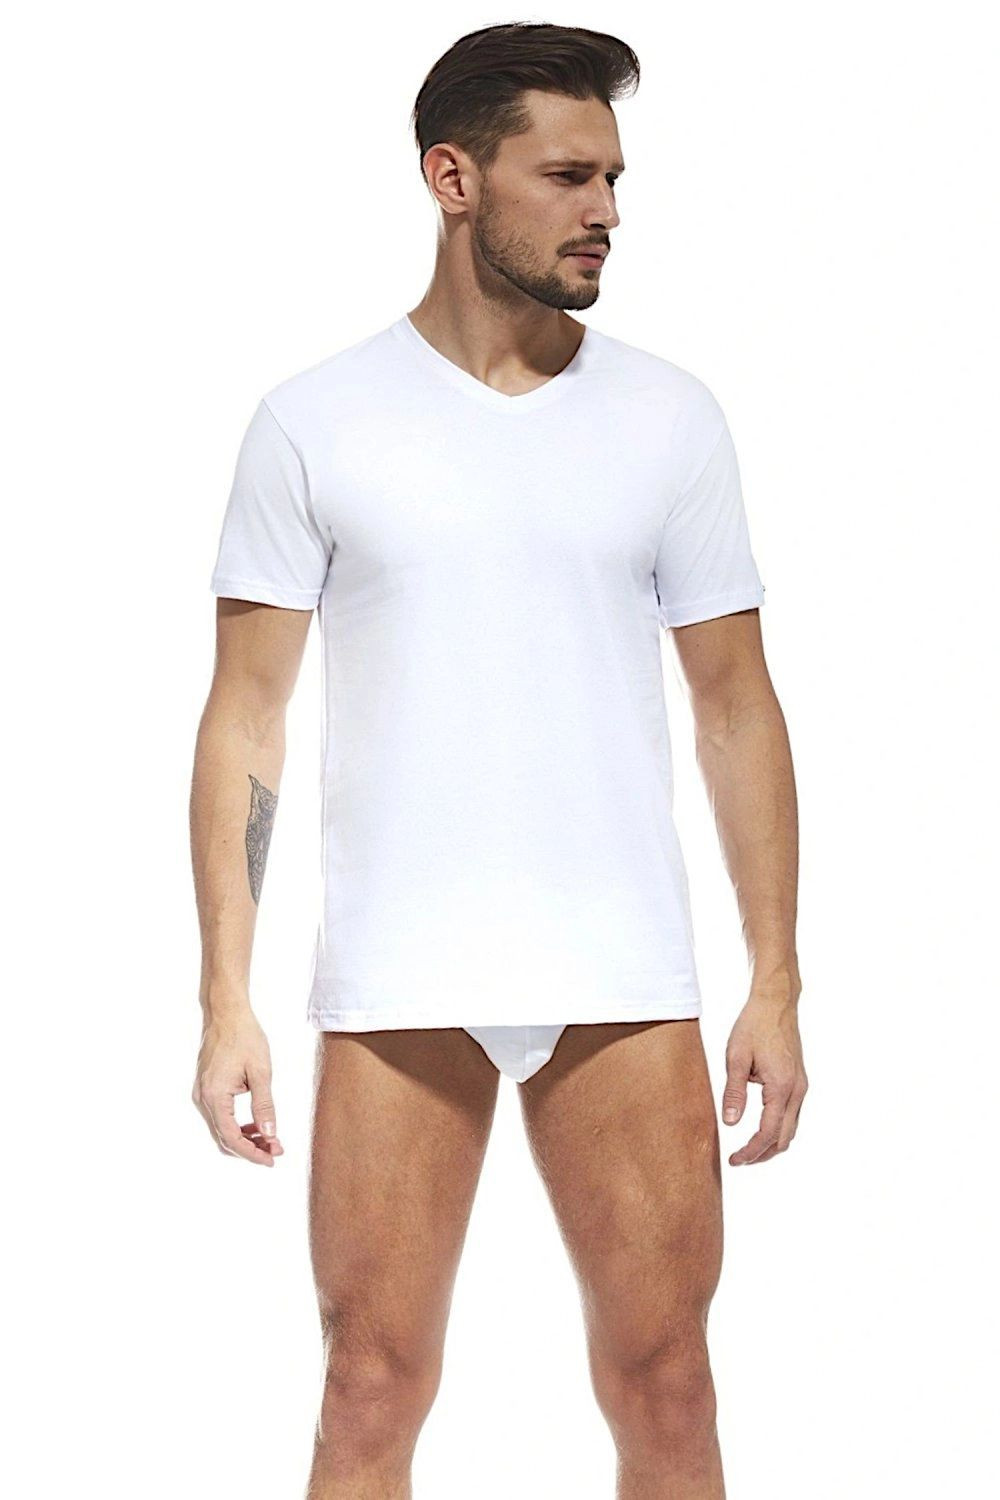 Pánské tričko 201 Authentic new biała - CORNETTE Bílá XXL